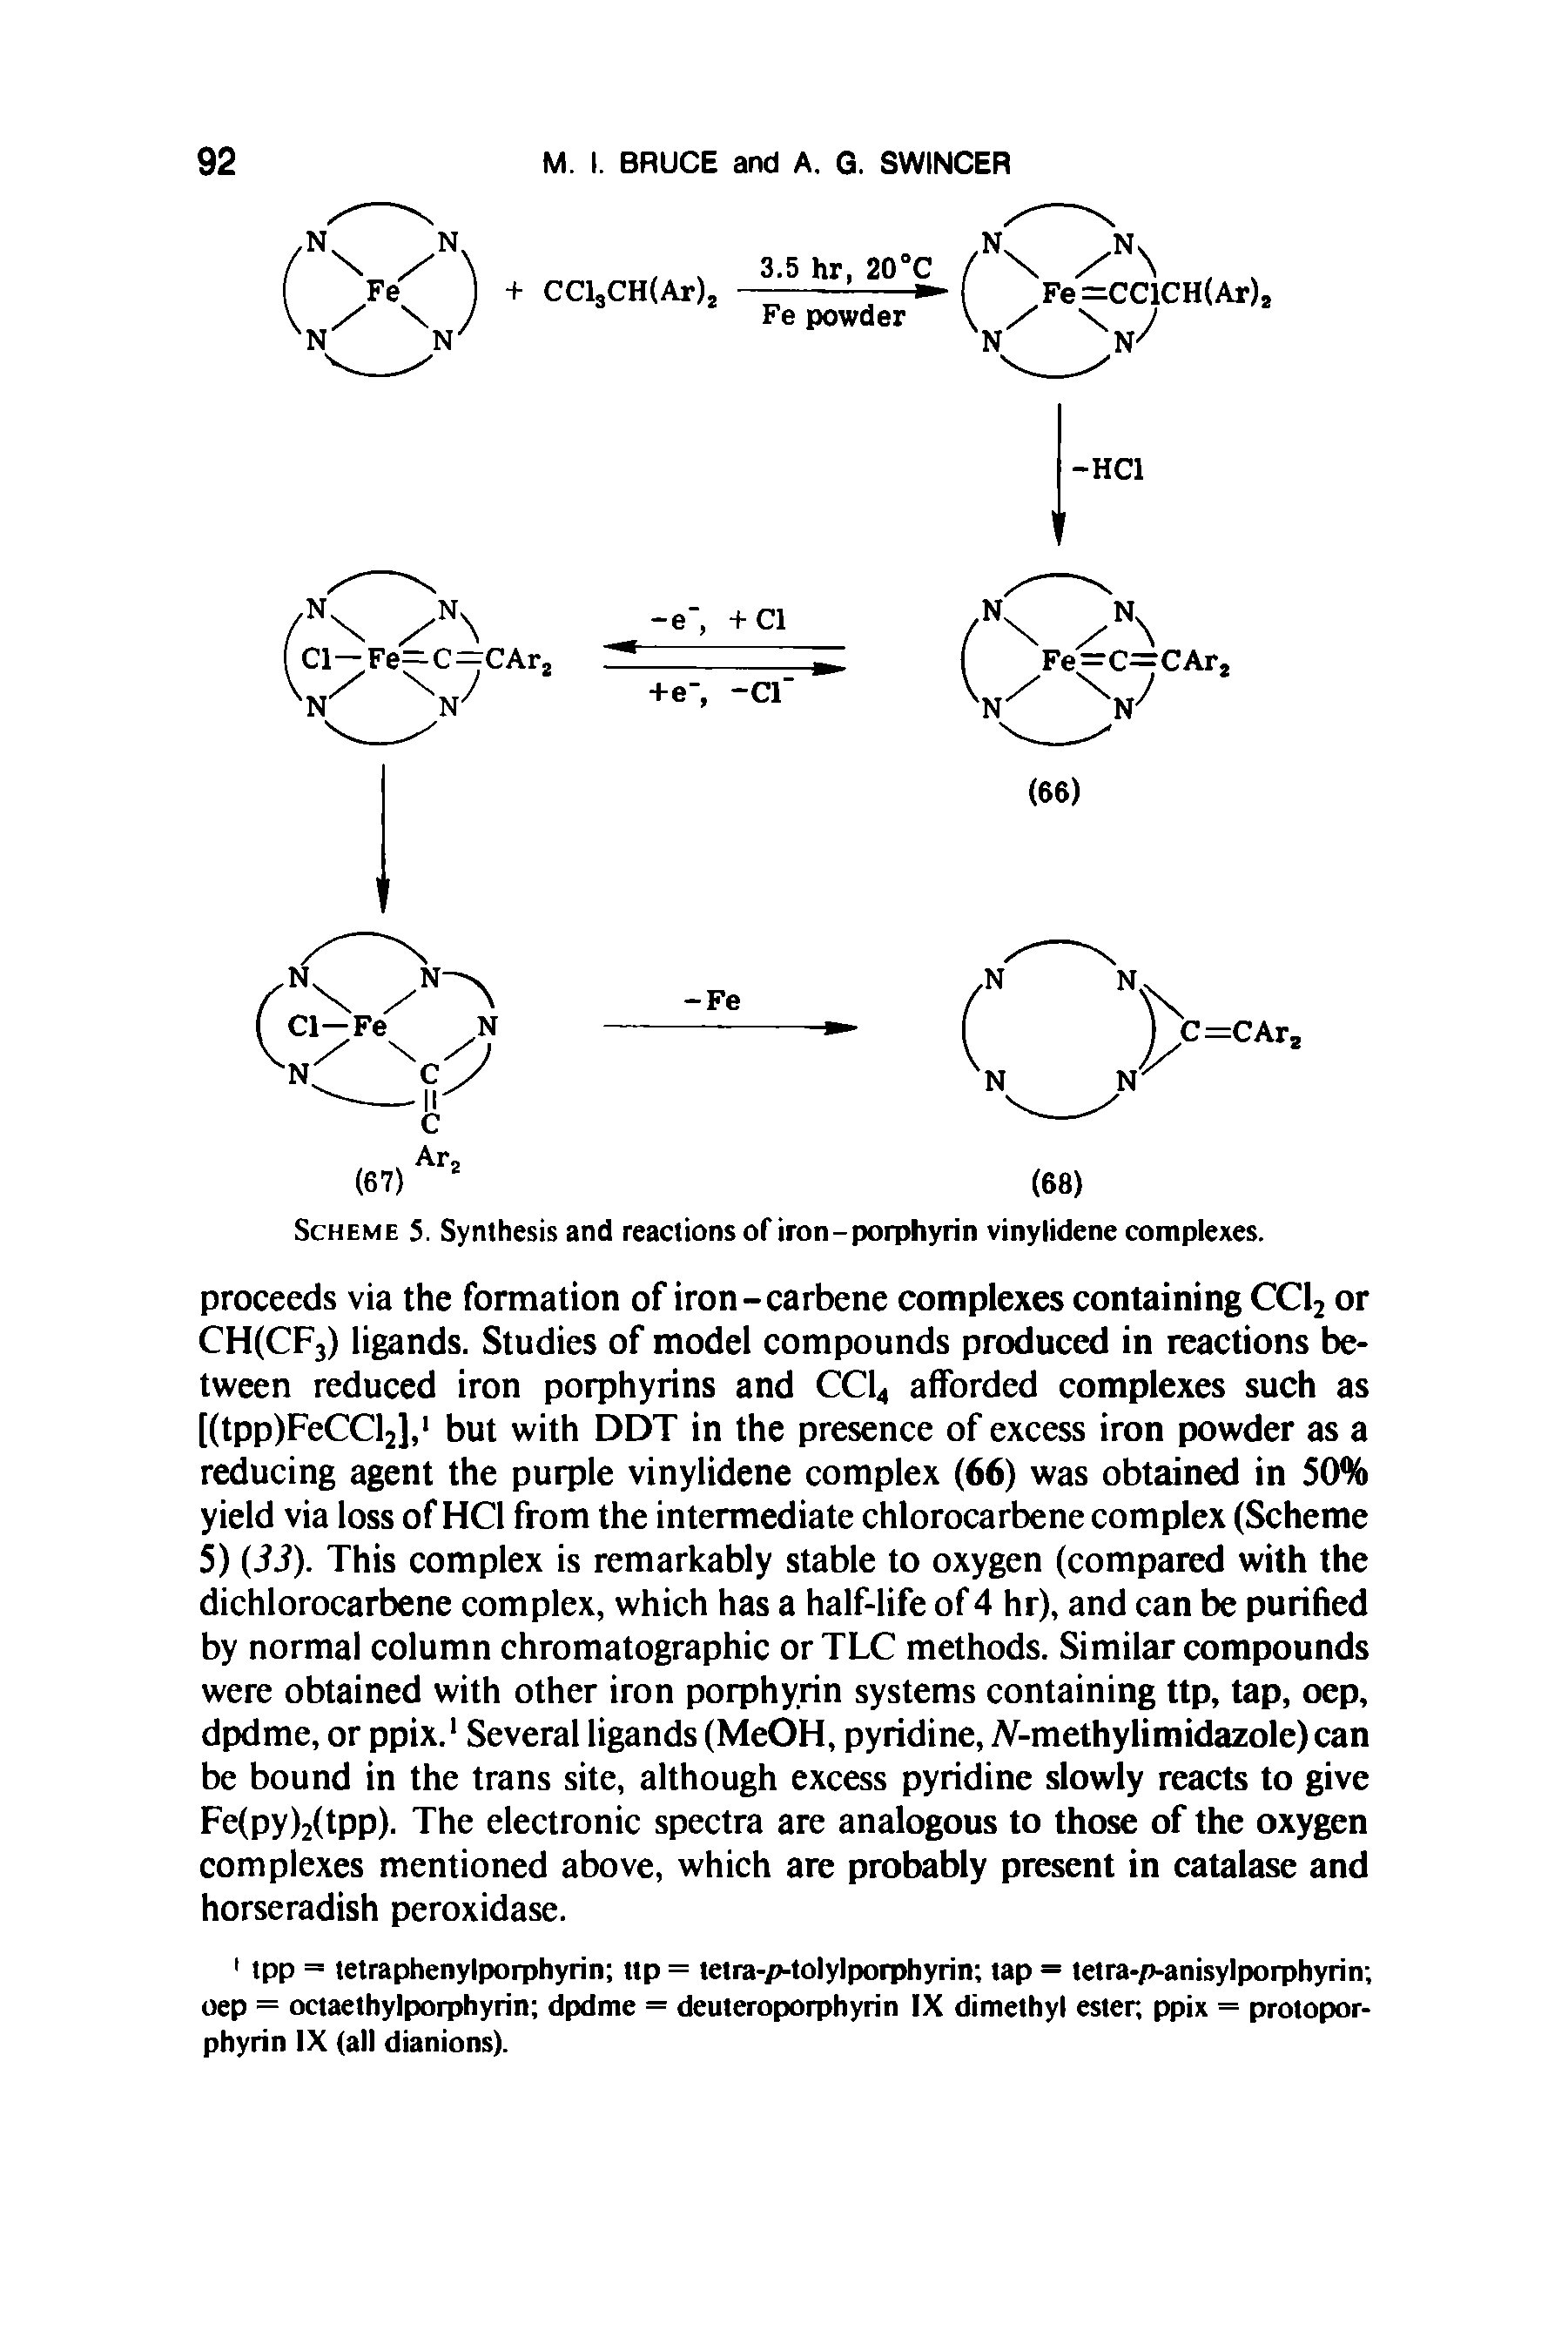 Scheme 5. Synthesis and reactions of iron-porphyrin vinylidene complexes.